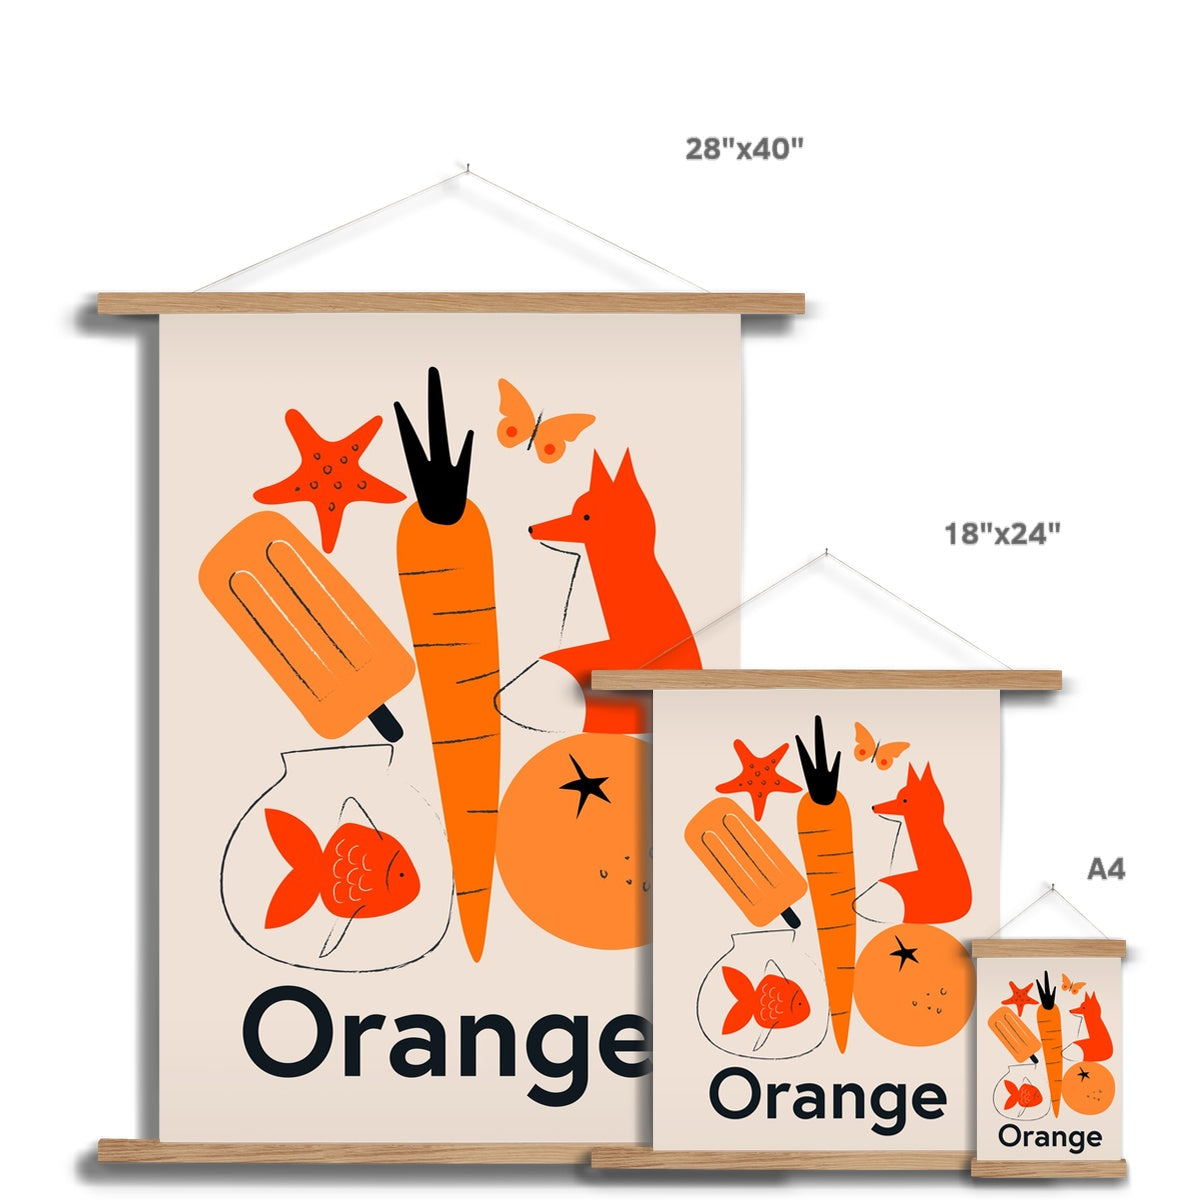 Favourite Colour Orange Fine Art Print with Hanger